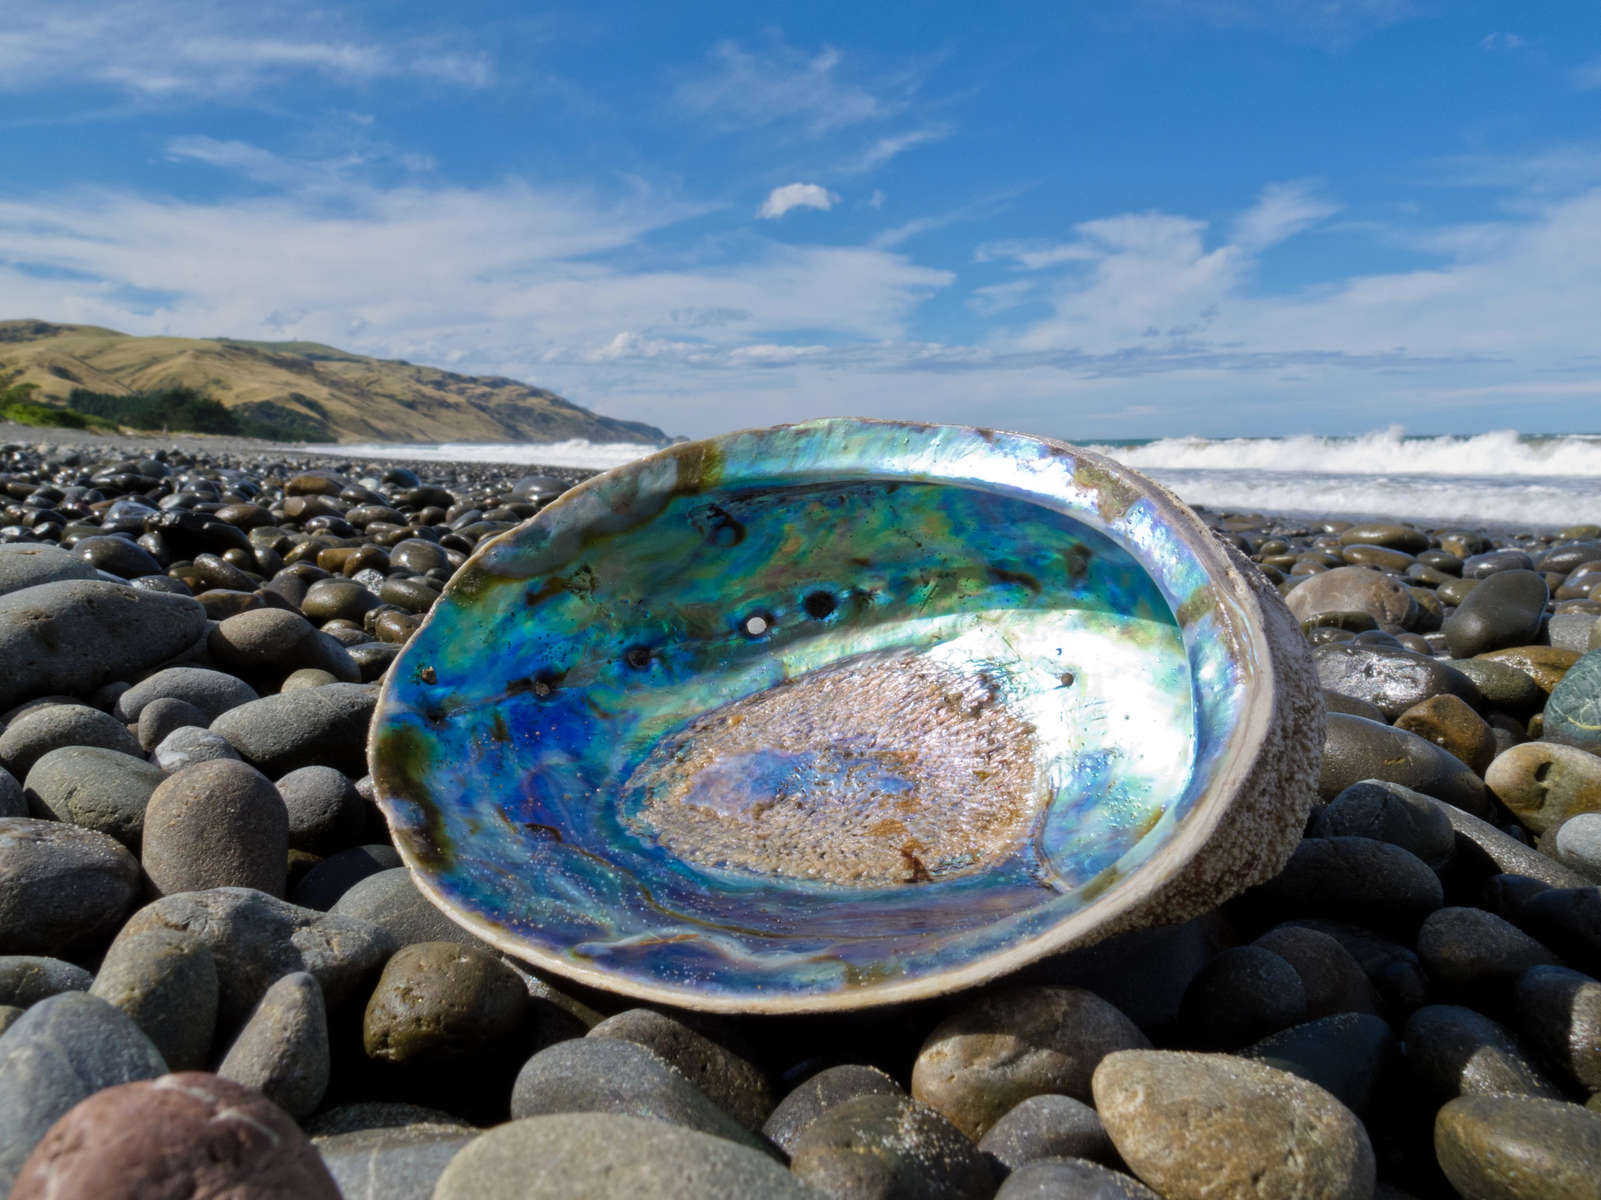 Shiny nacre of Paua shell, Abalone, washed ashore